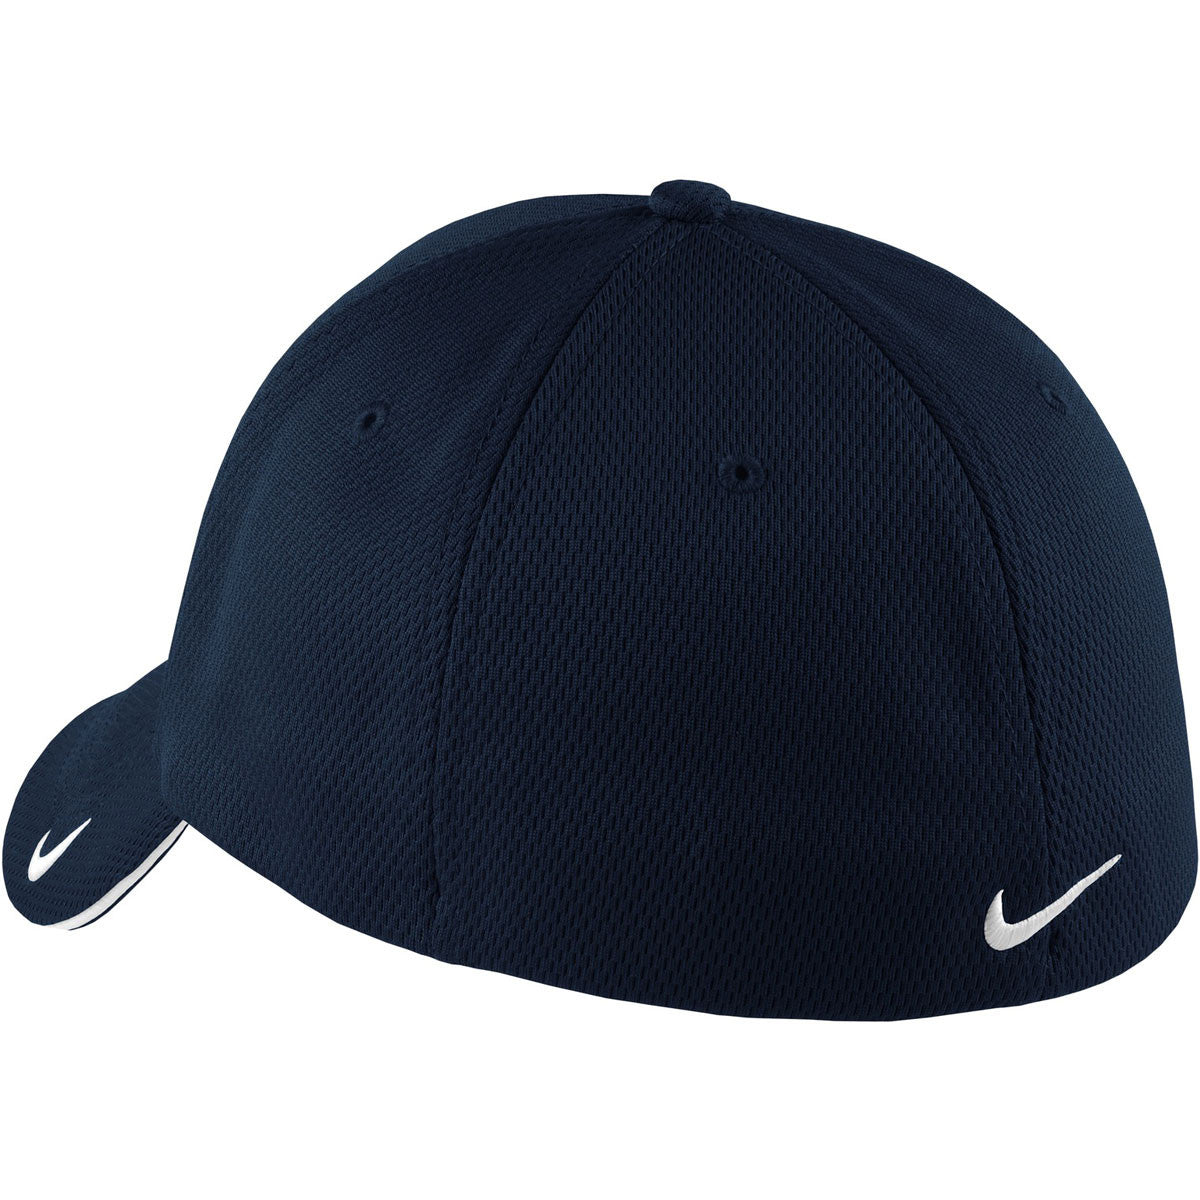 Nike Golf Navy Dri-FIT Flex Cap Mesh